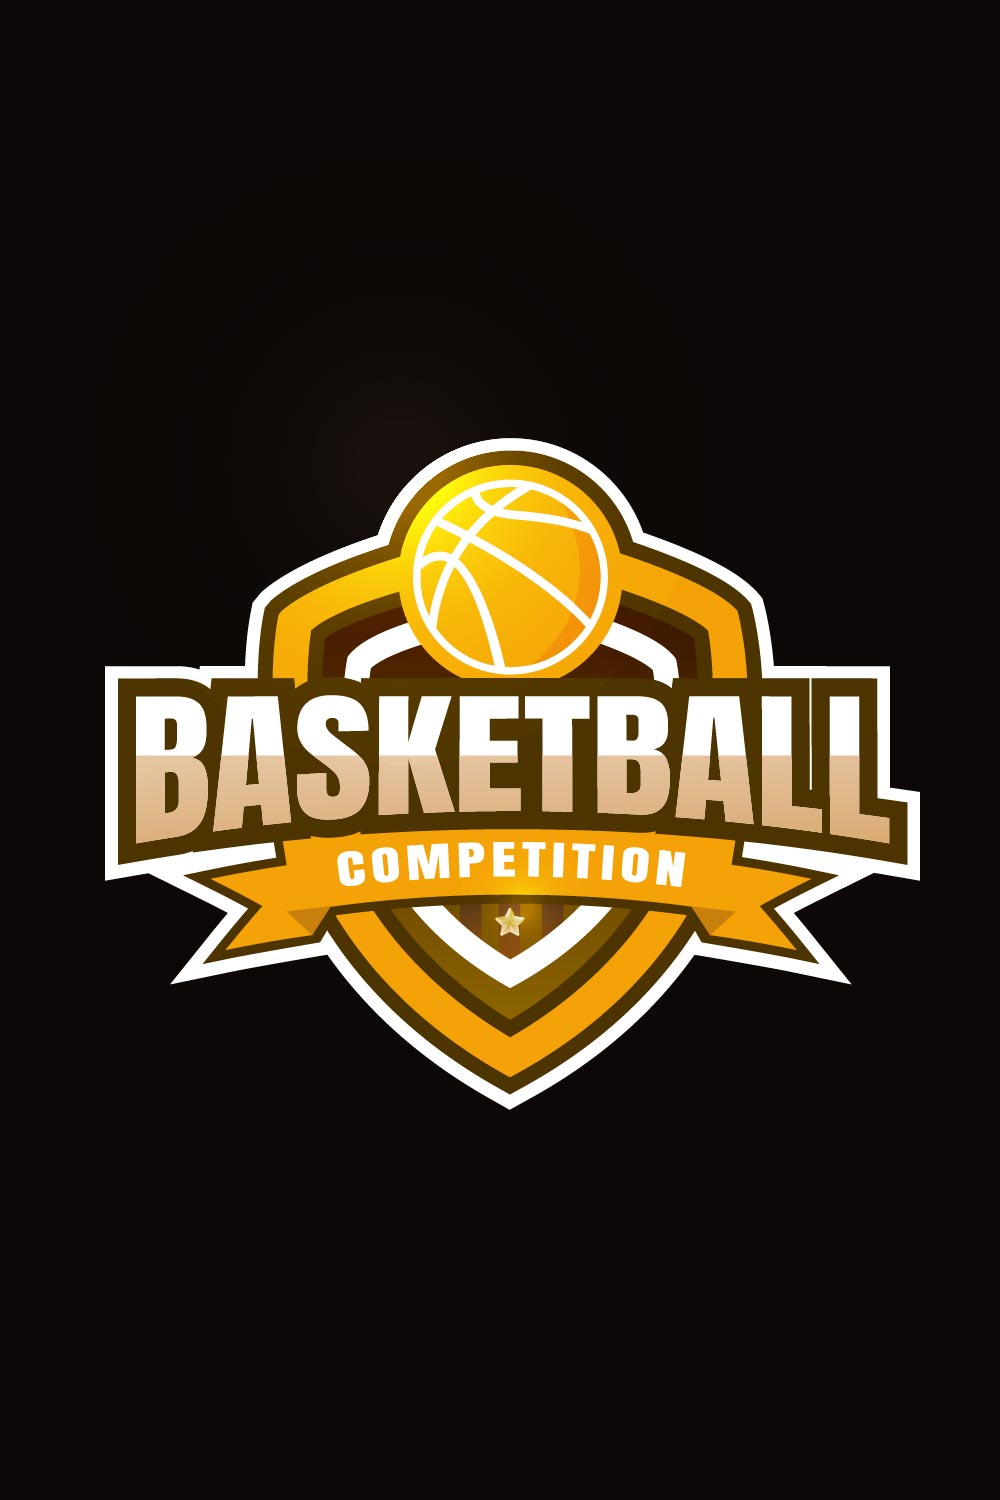 Logo Emblem of Basketball Competition pinterest image.